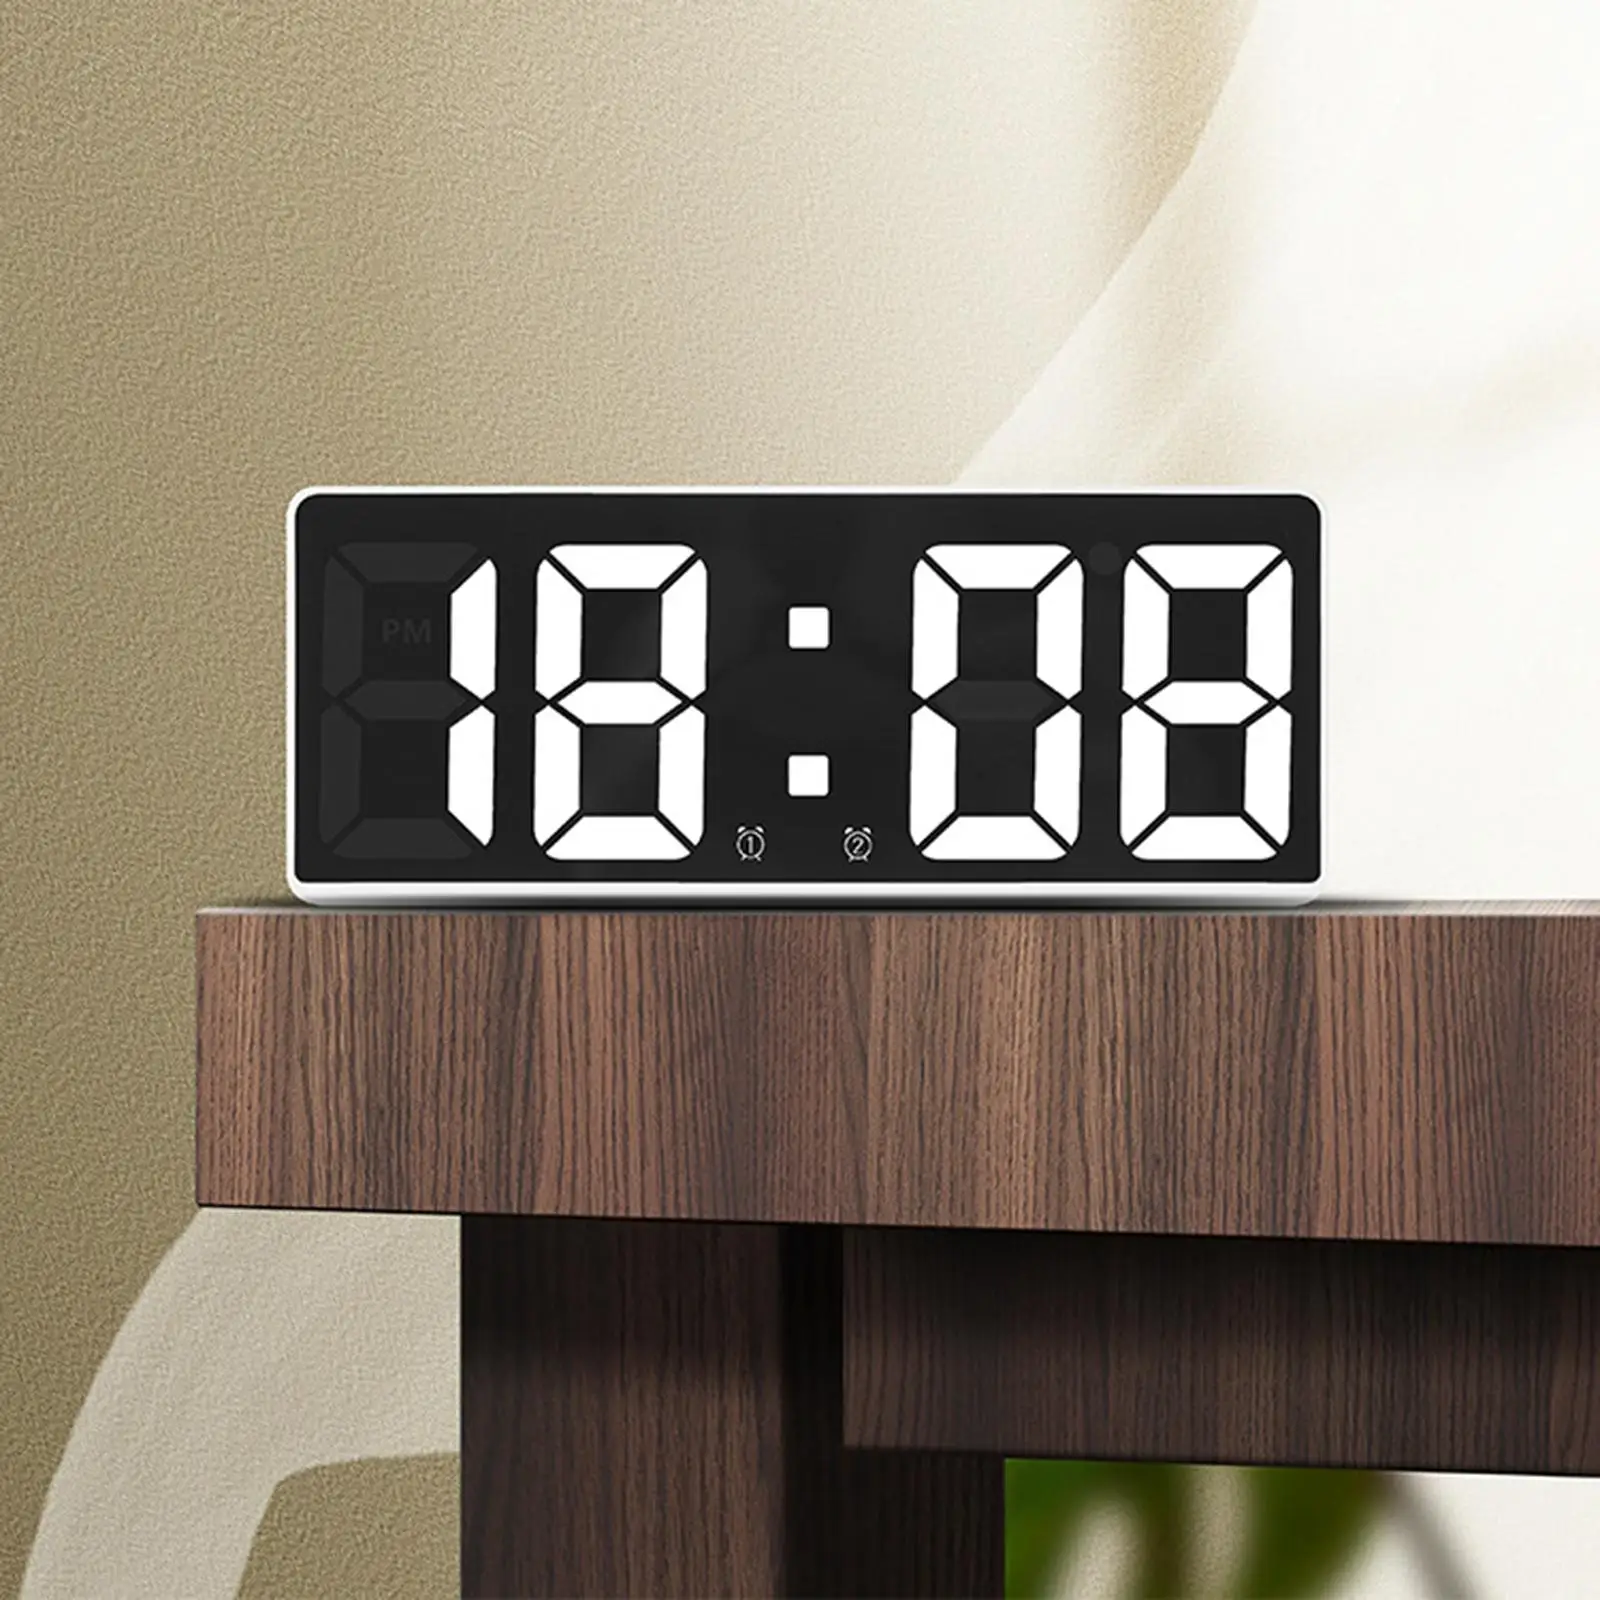 Digital Alarm Clock Table Large LED Display USB Charger Calendar Voice Control